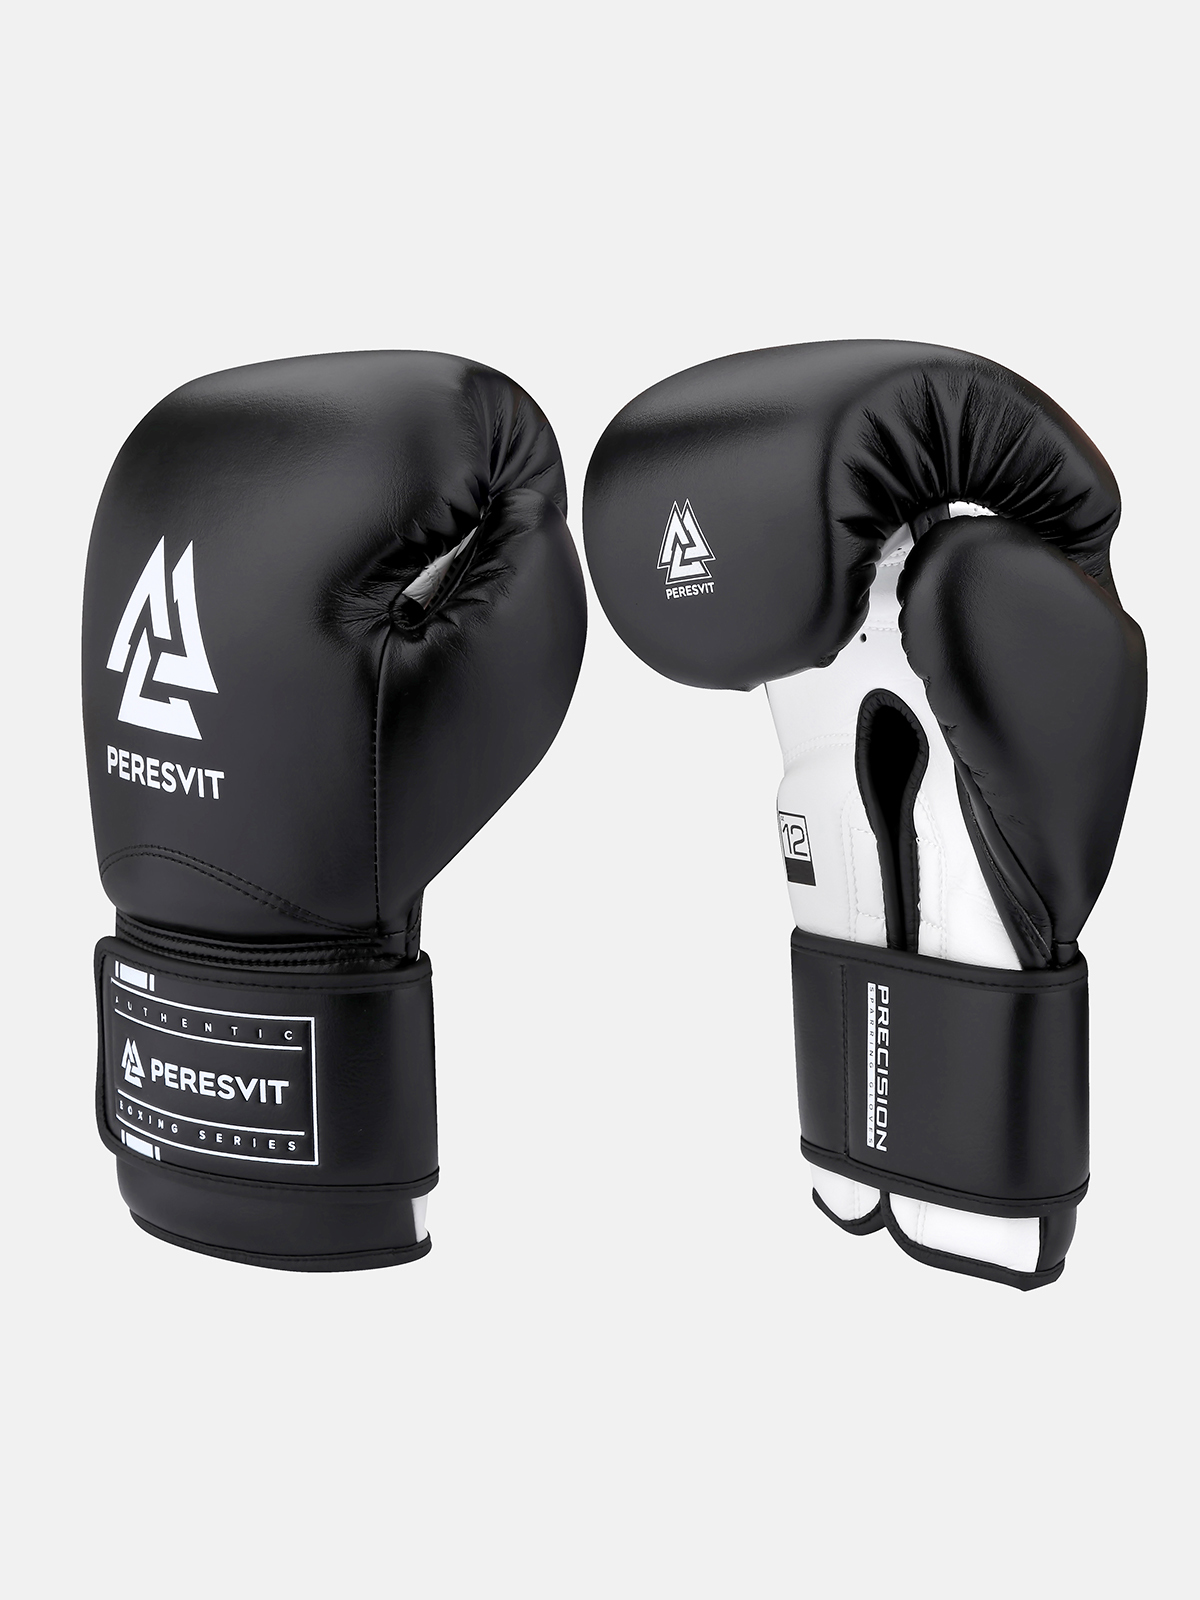 Peresvit Precision Boxing Gloves, Photo No. 2